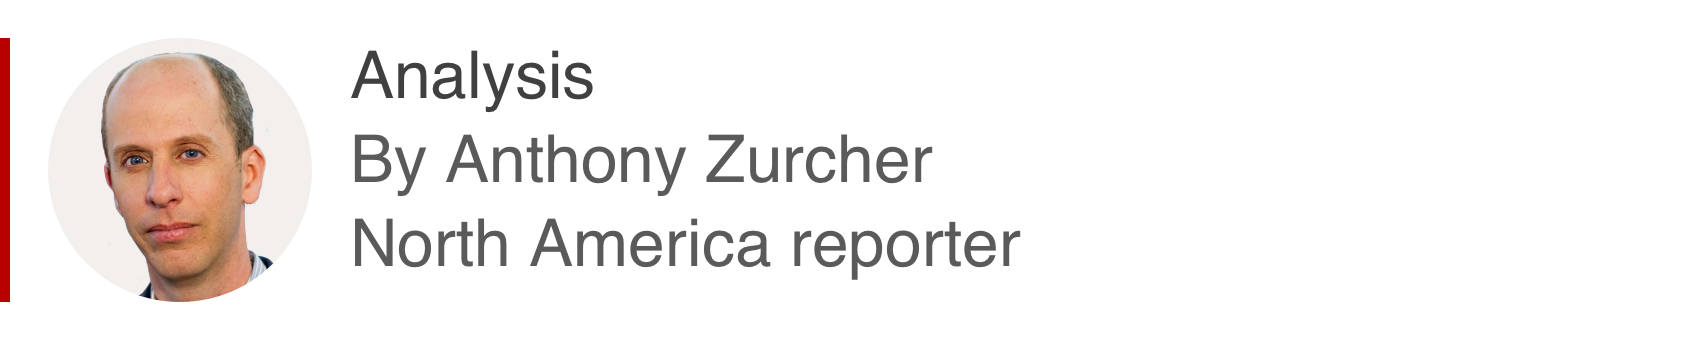 Cuadro de análisis por Anthony Zurcher, reportero de Norteamérica